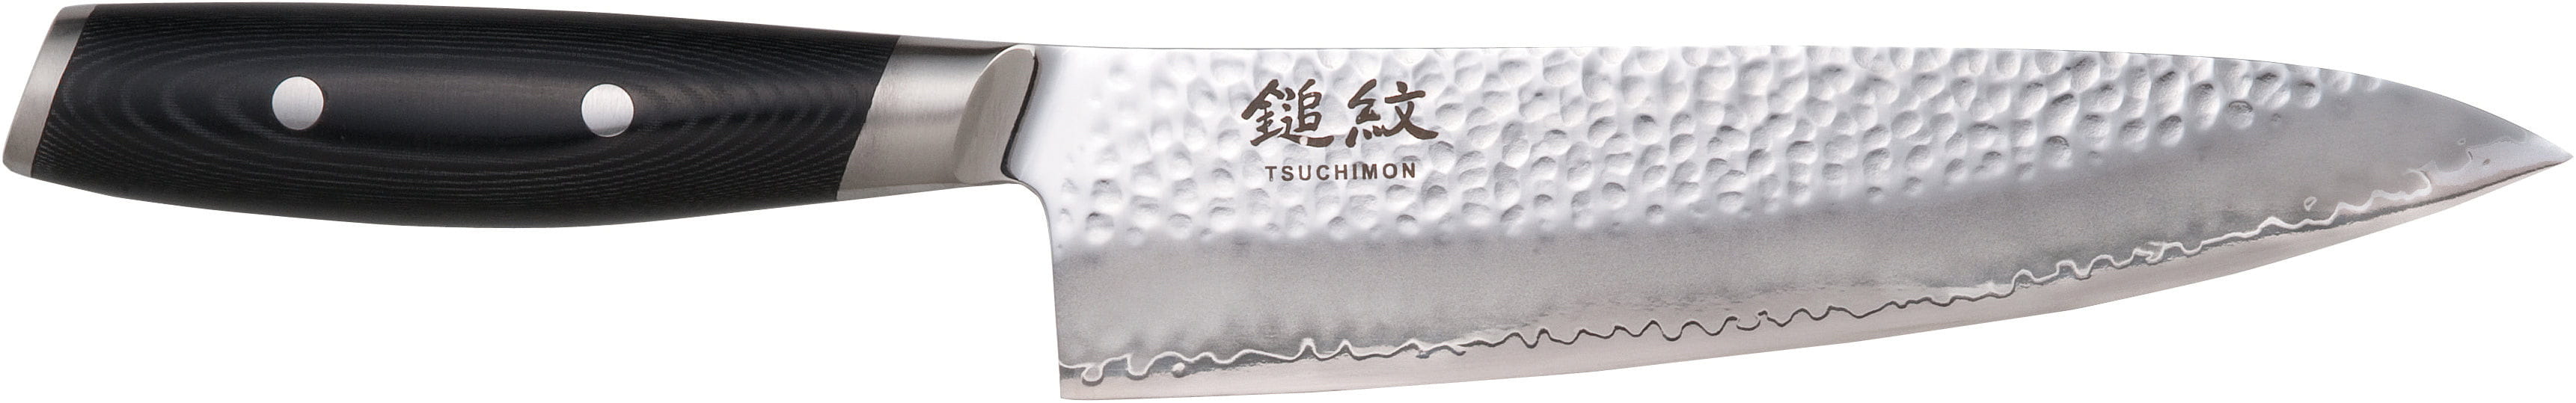 Yaxell Tsuchimon Chef Knife, 20 cm